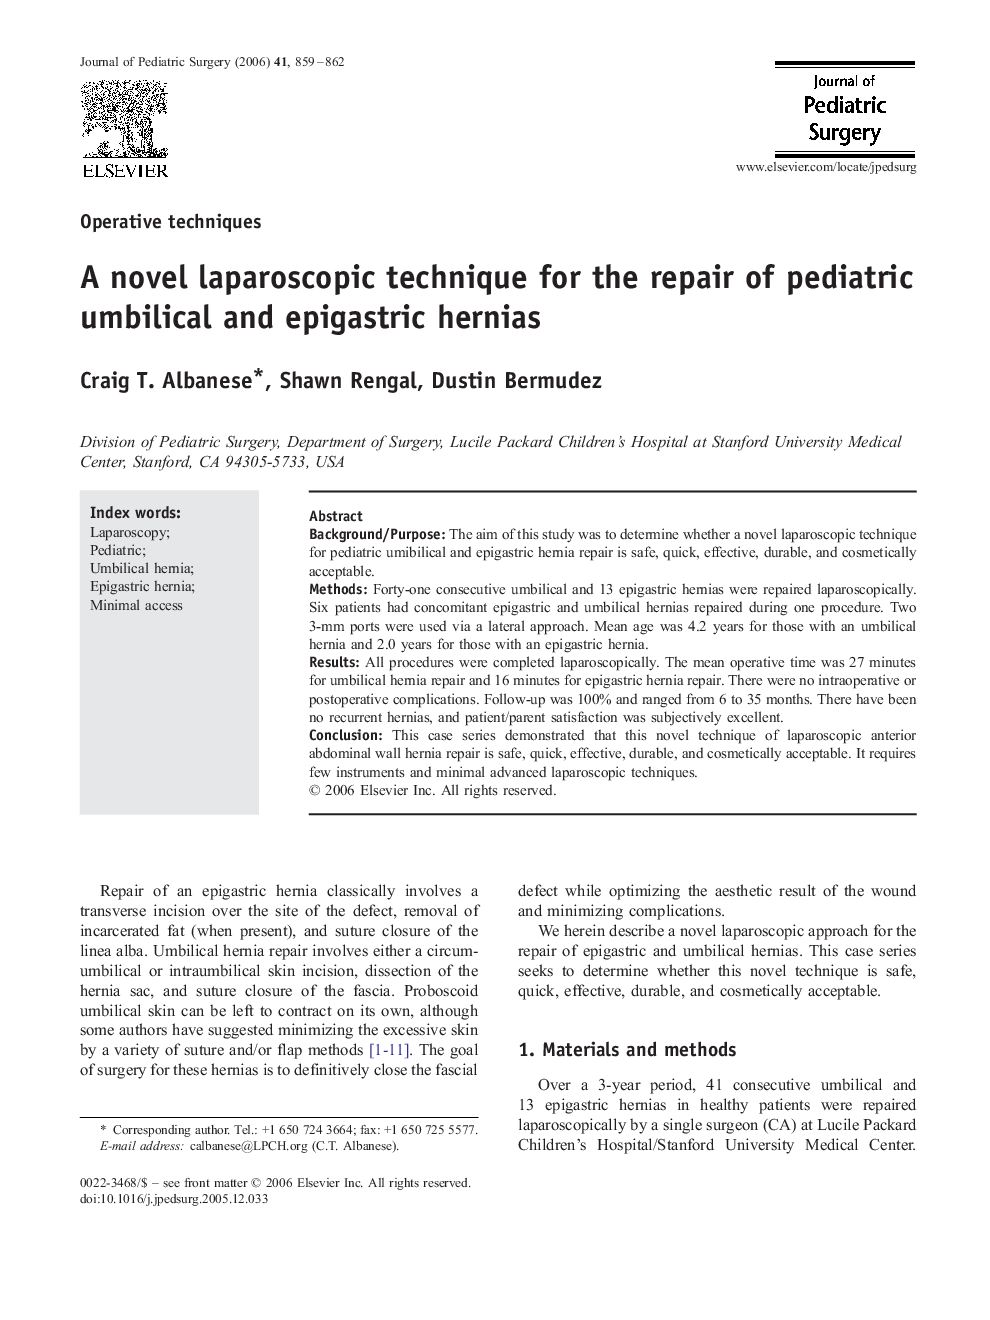 A novel laparoscopic technique for the repair of pediatric umbilical and epigastric hernias